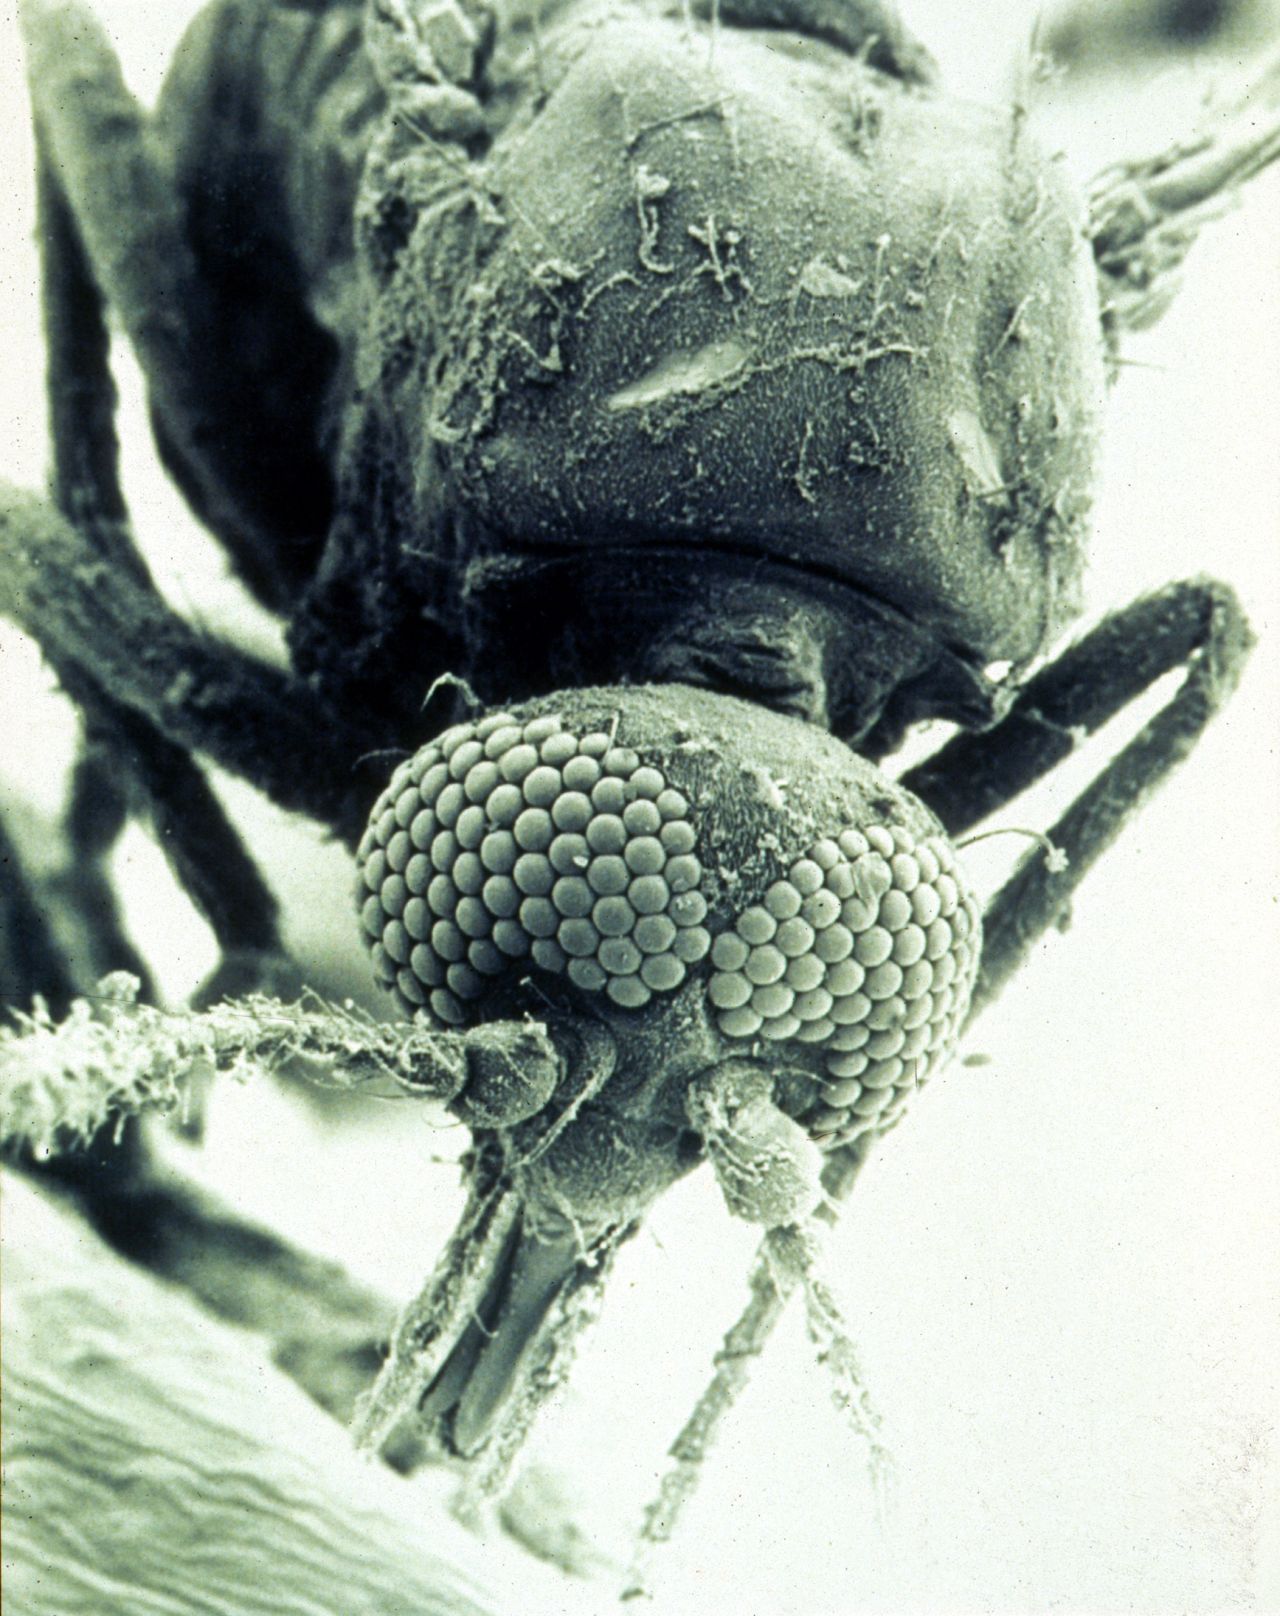 CSIRO Science Image 1791 SEM of a biting midge Culicoides brevitarsis